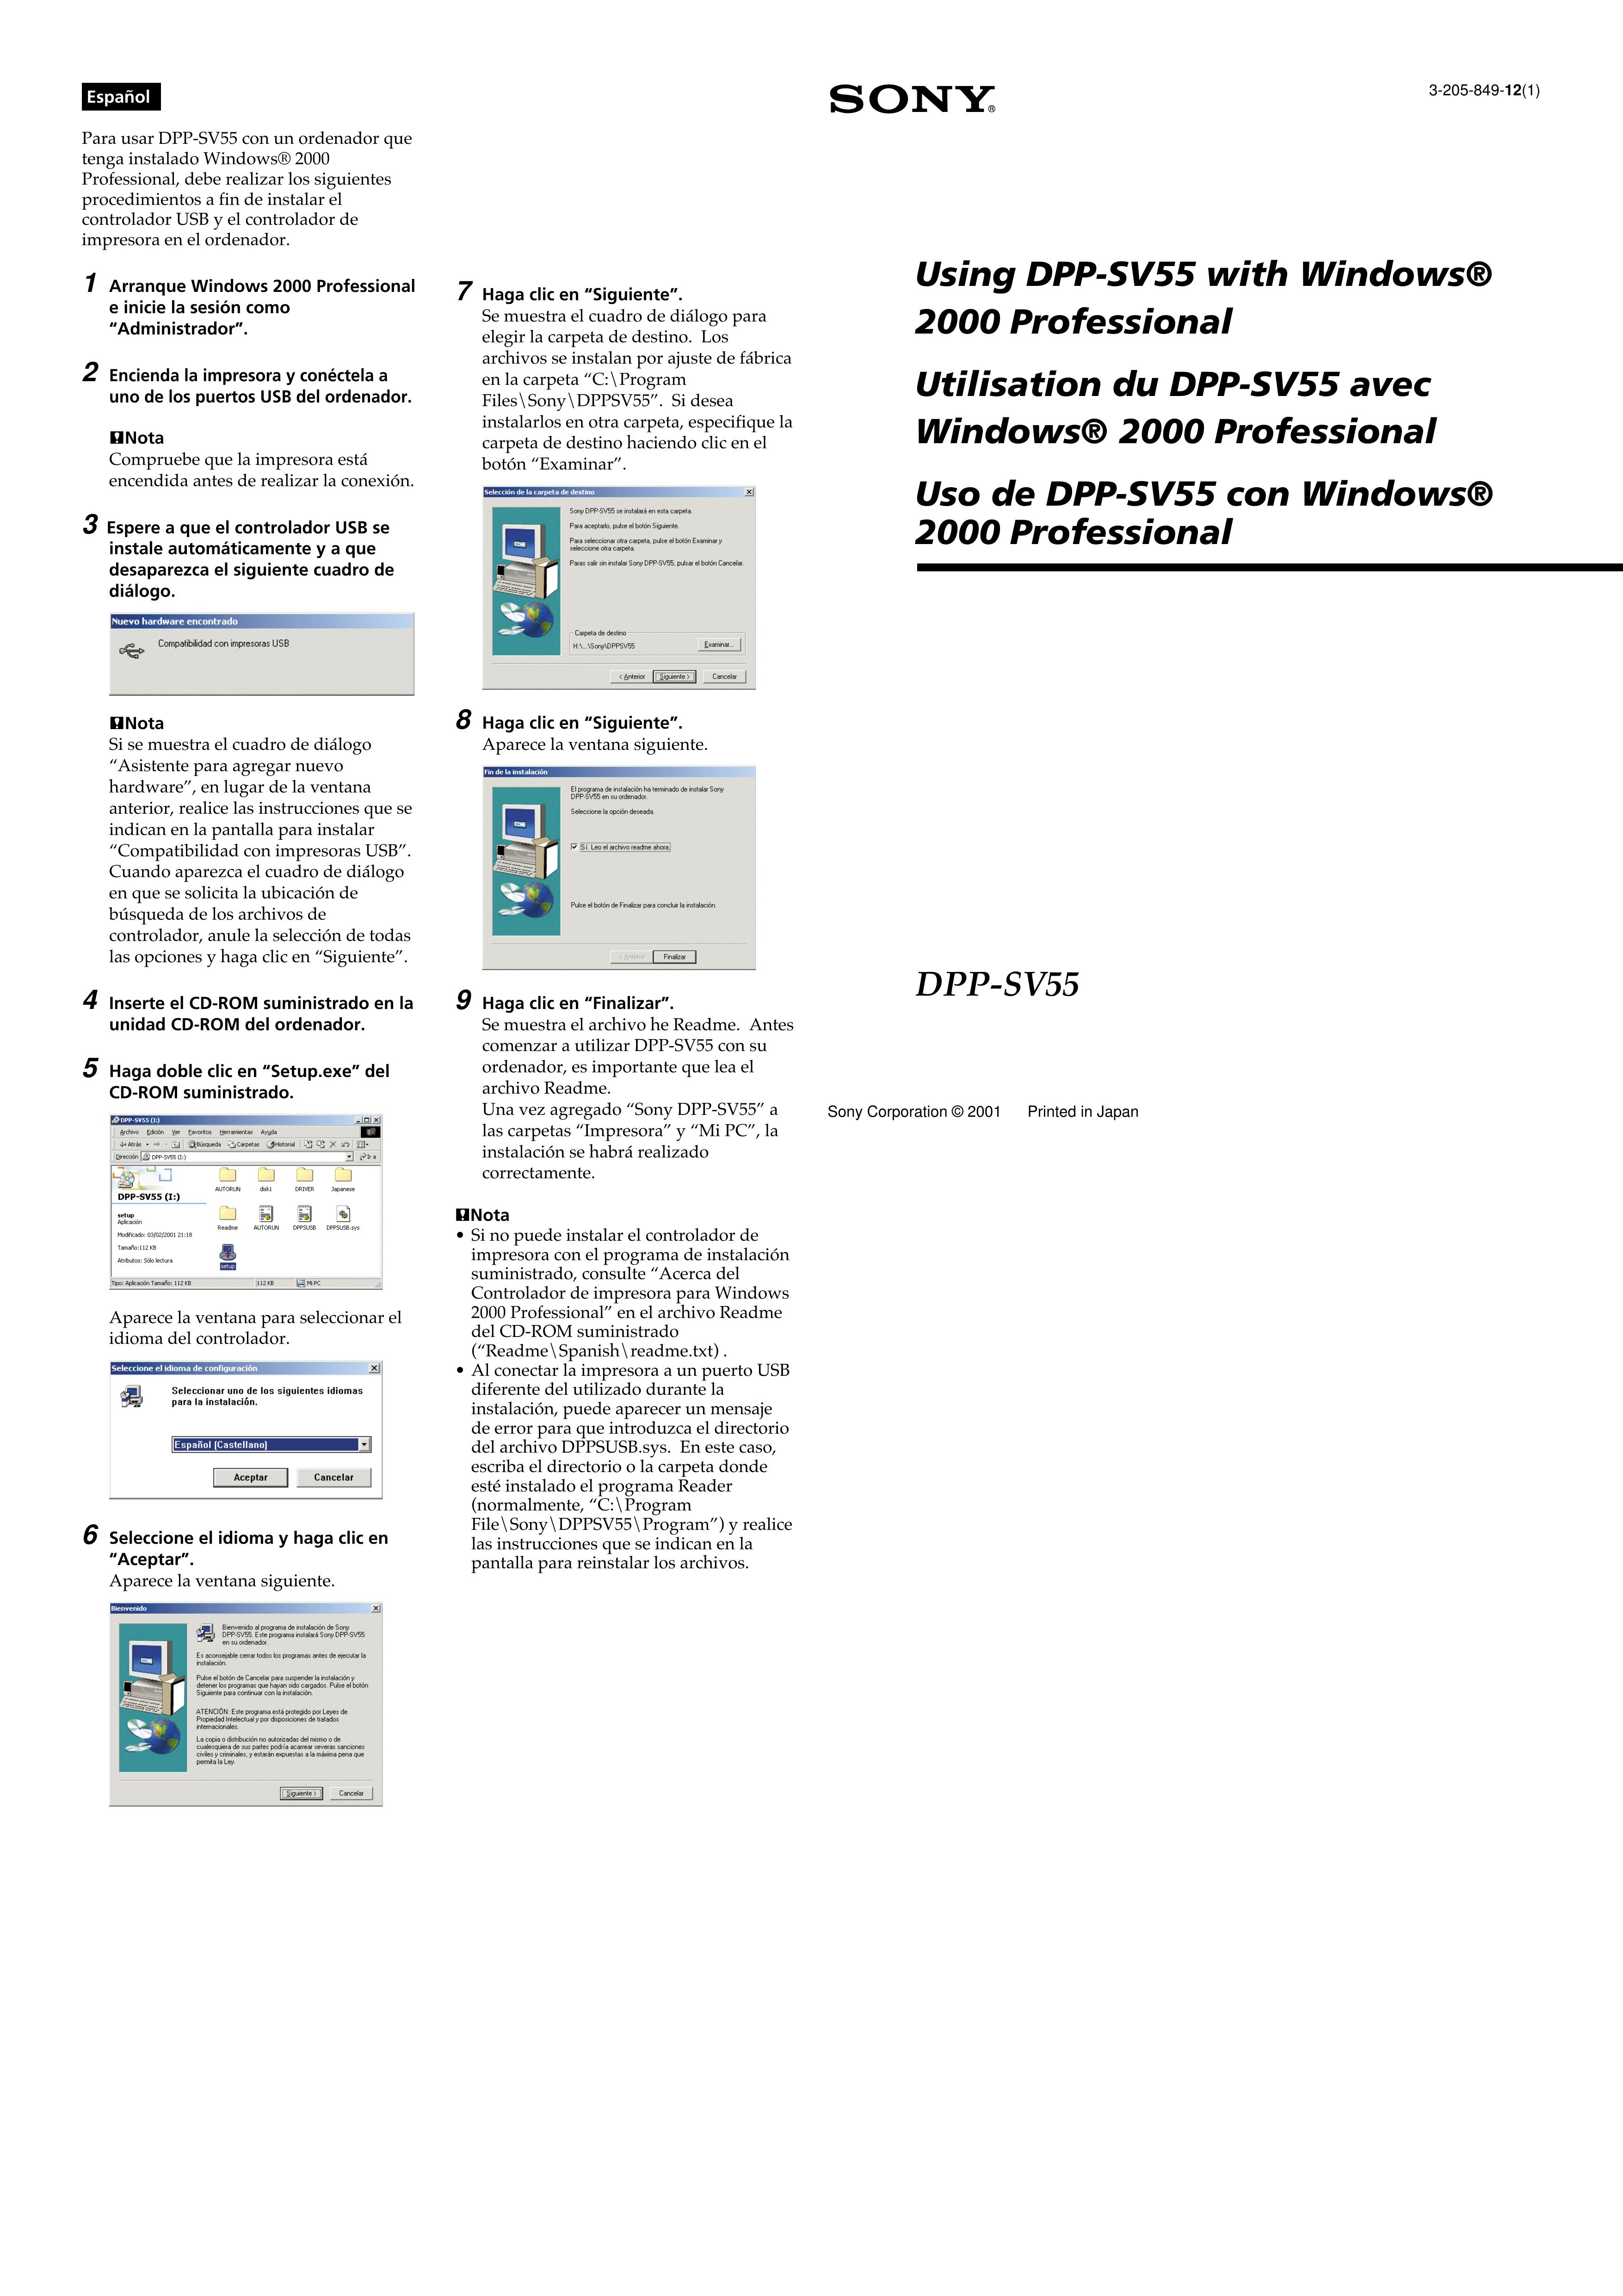 Sony DPP-SV55 Photo Printer User Manual